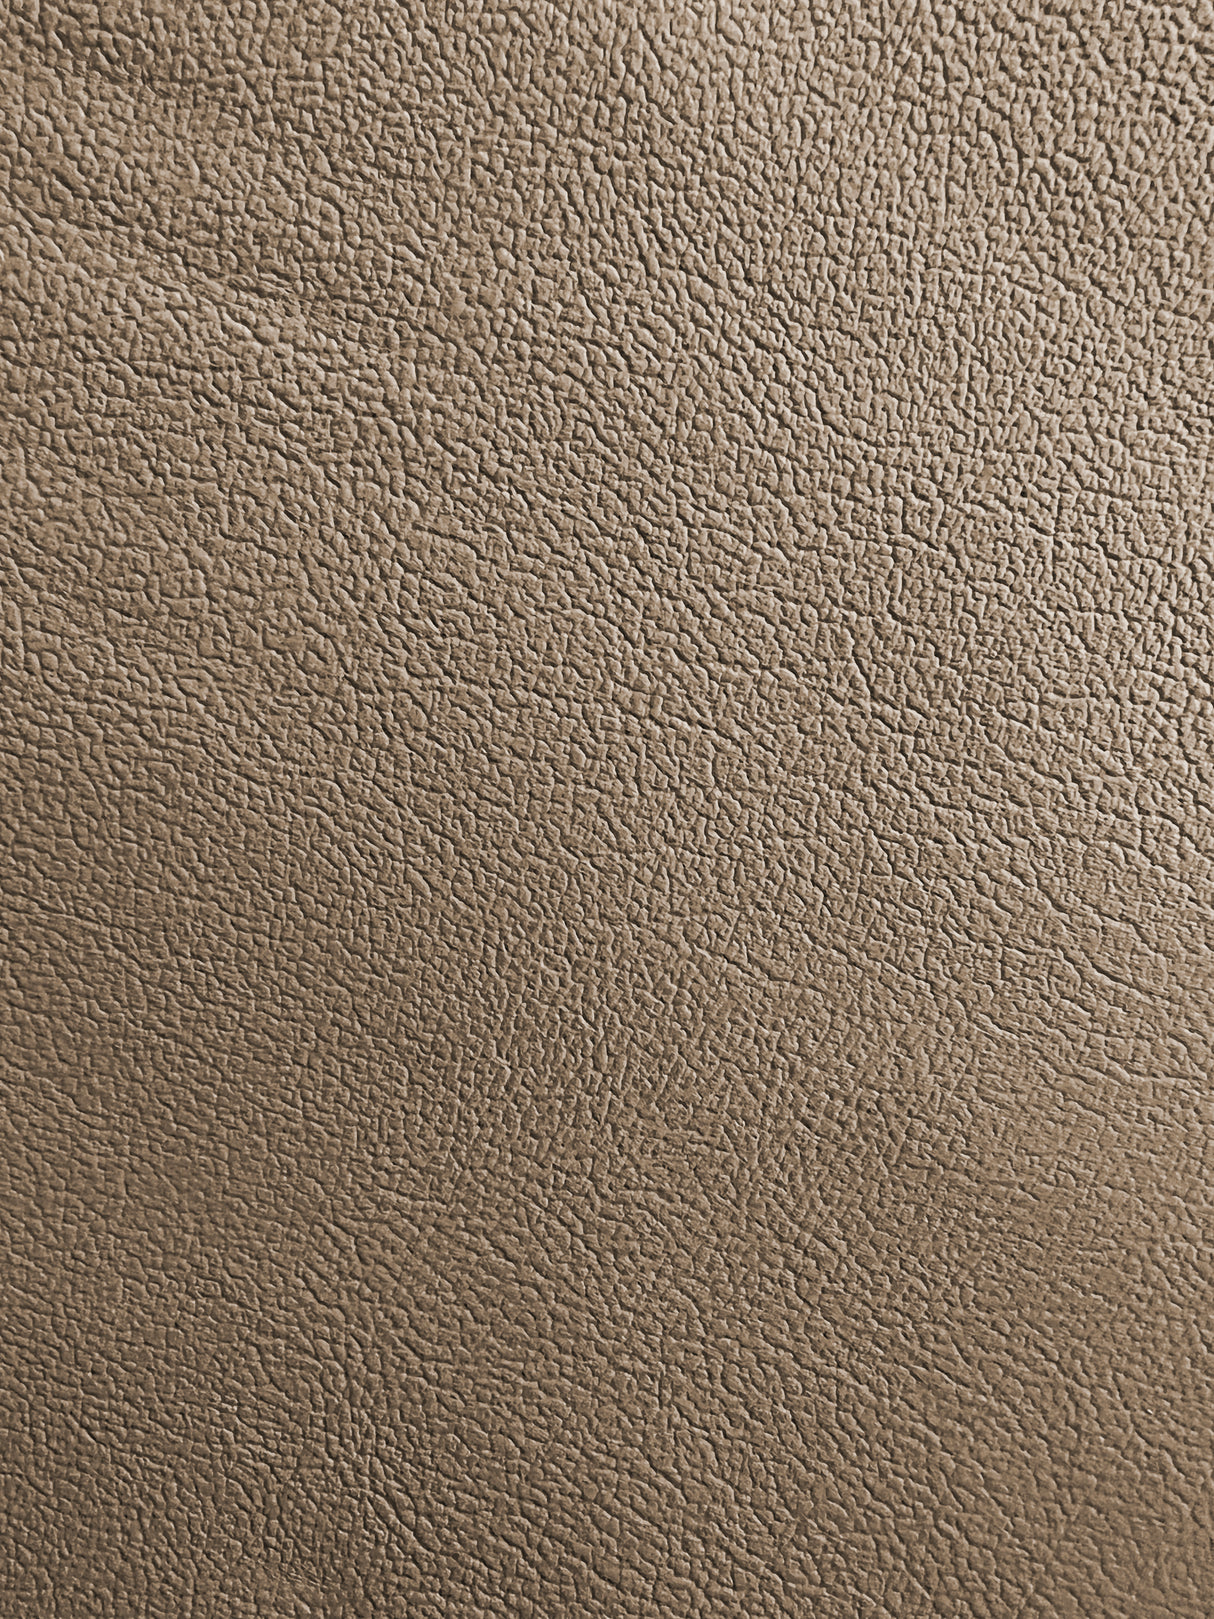 7 Hide Pack of Medium Neutral (Grey) Sandstone (Corinthian) OEM Leather GM 99-02 Chevy Silverado